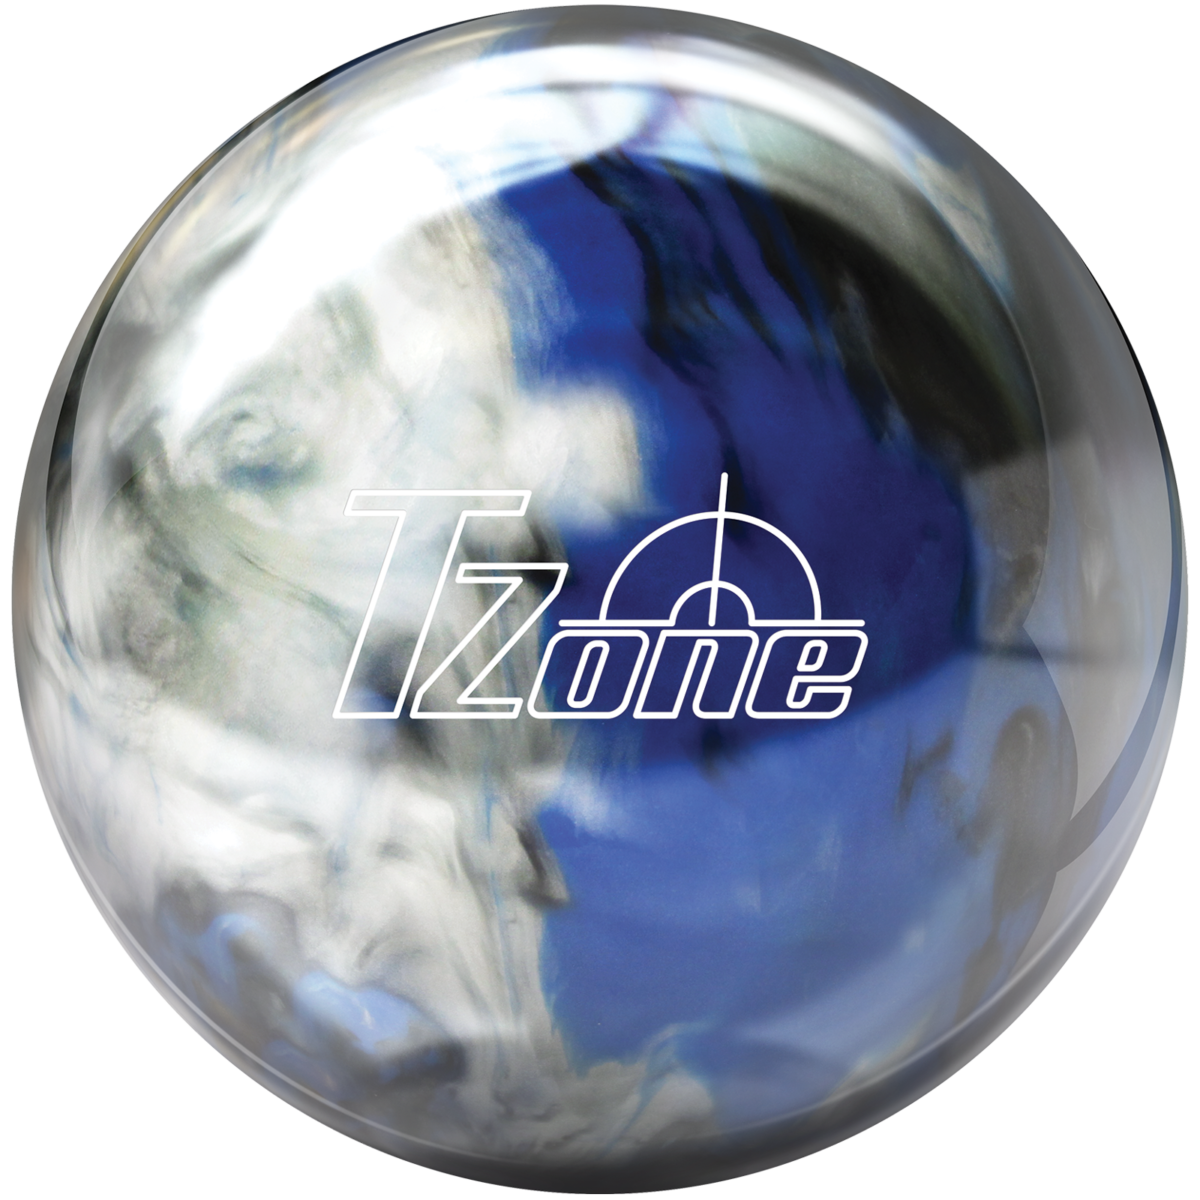 Brunswick Tzone Deep Space Bowling Ball NIB 1st Quality You Choose Weight